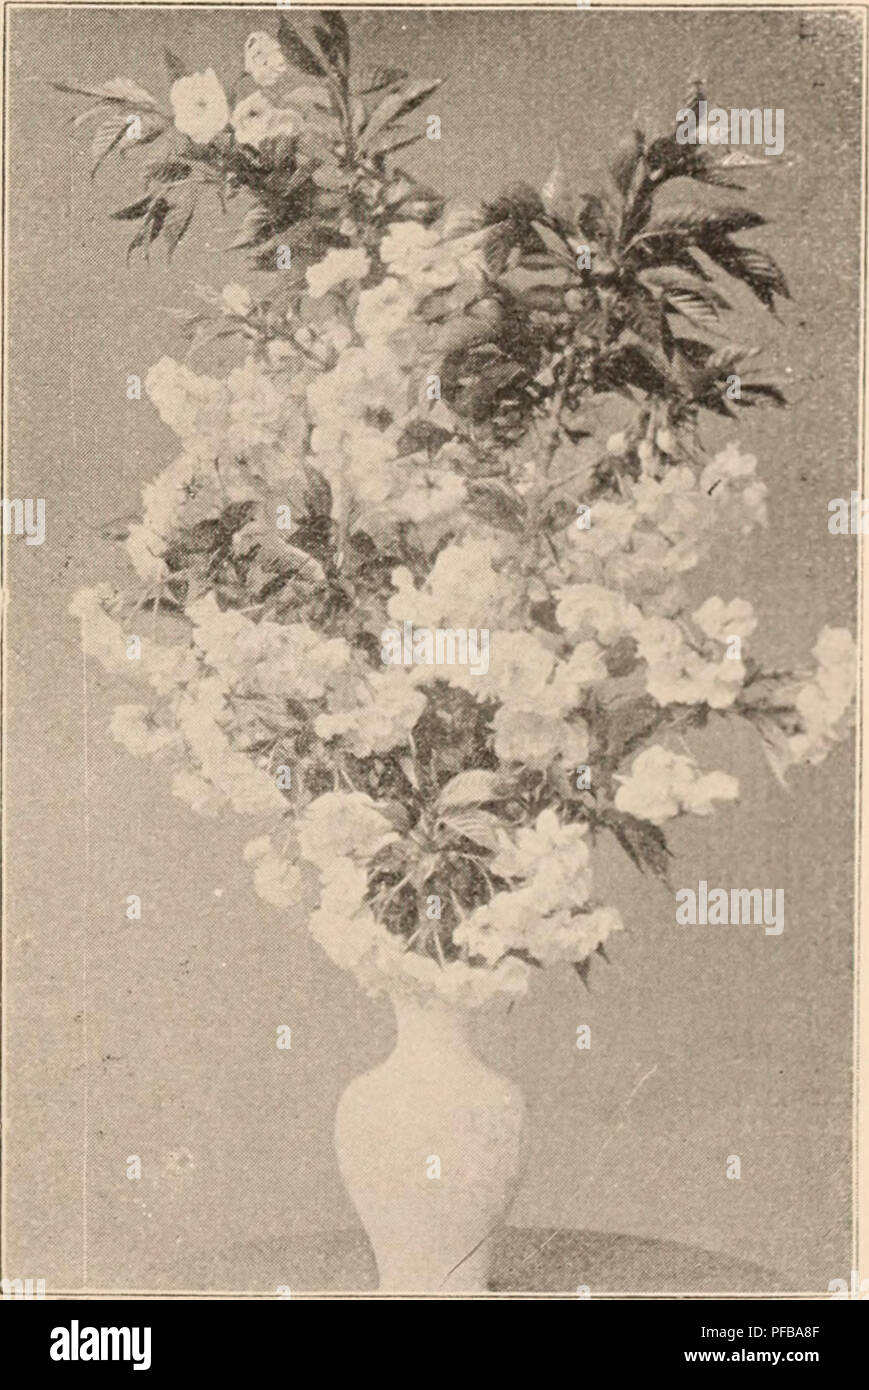 . Descriptive catalogue of flowering, ornamental trees, shrubs, bulbs, herbs, climbers, fruit trees, &amp;c., &amp;c., &amp;c. / for sale by the Yokohama Nursery Co., Limited.. Nursery Catalogue. 37 9. 10. II. 12. 13. 14. 15. 17 18. Waj?noliji Obovata discolor, lic^ht purple flower richly variegfatetl with white (pot j^rown) Magnolia VVatsoili, white fragrant, i^lobul.ir bloom opens facin^;^ upward (pot grown) Ma*&gt;:nolia parvittora, very much resembles the preceding but ])etals are thinner and flowers bloom droop- ing down-ward (pot grown) Mai^nolia ])arviflora, florc soini.])leno, the same Stock Photo